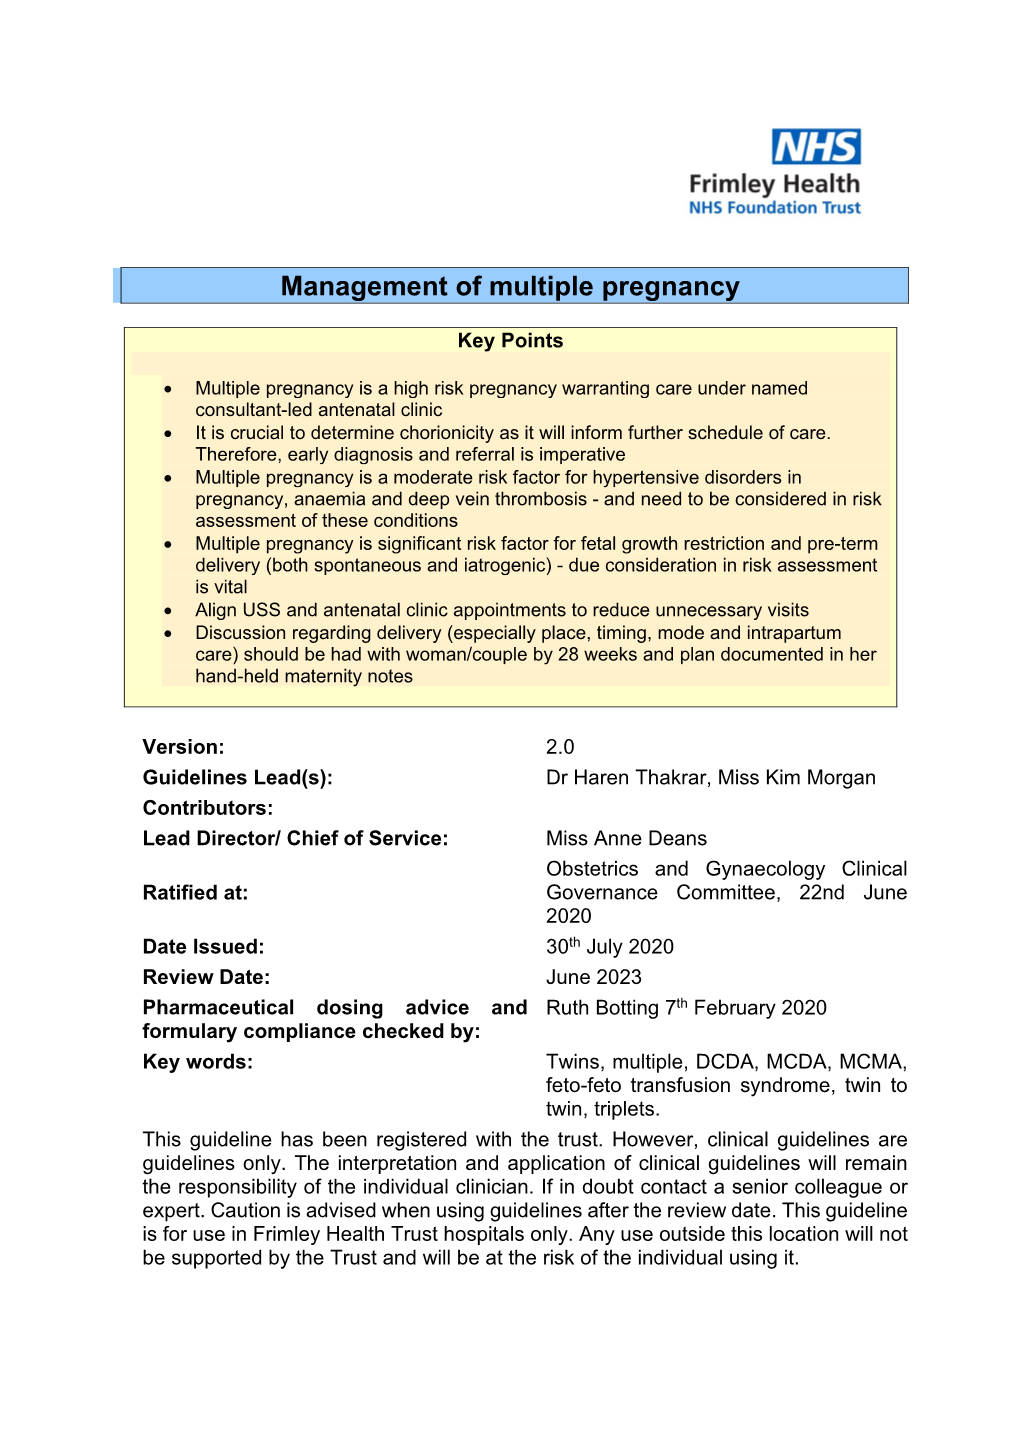 Management of Multiple Pregnancy